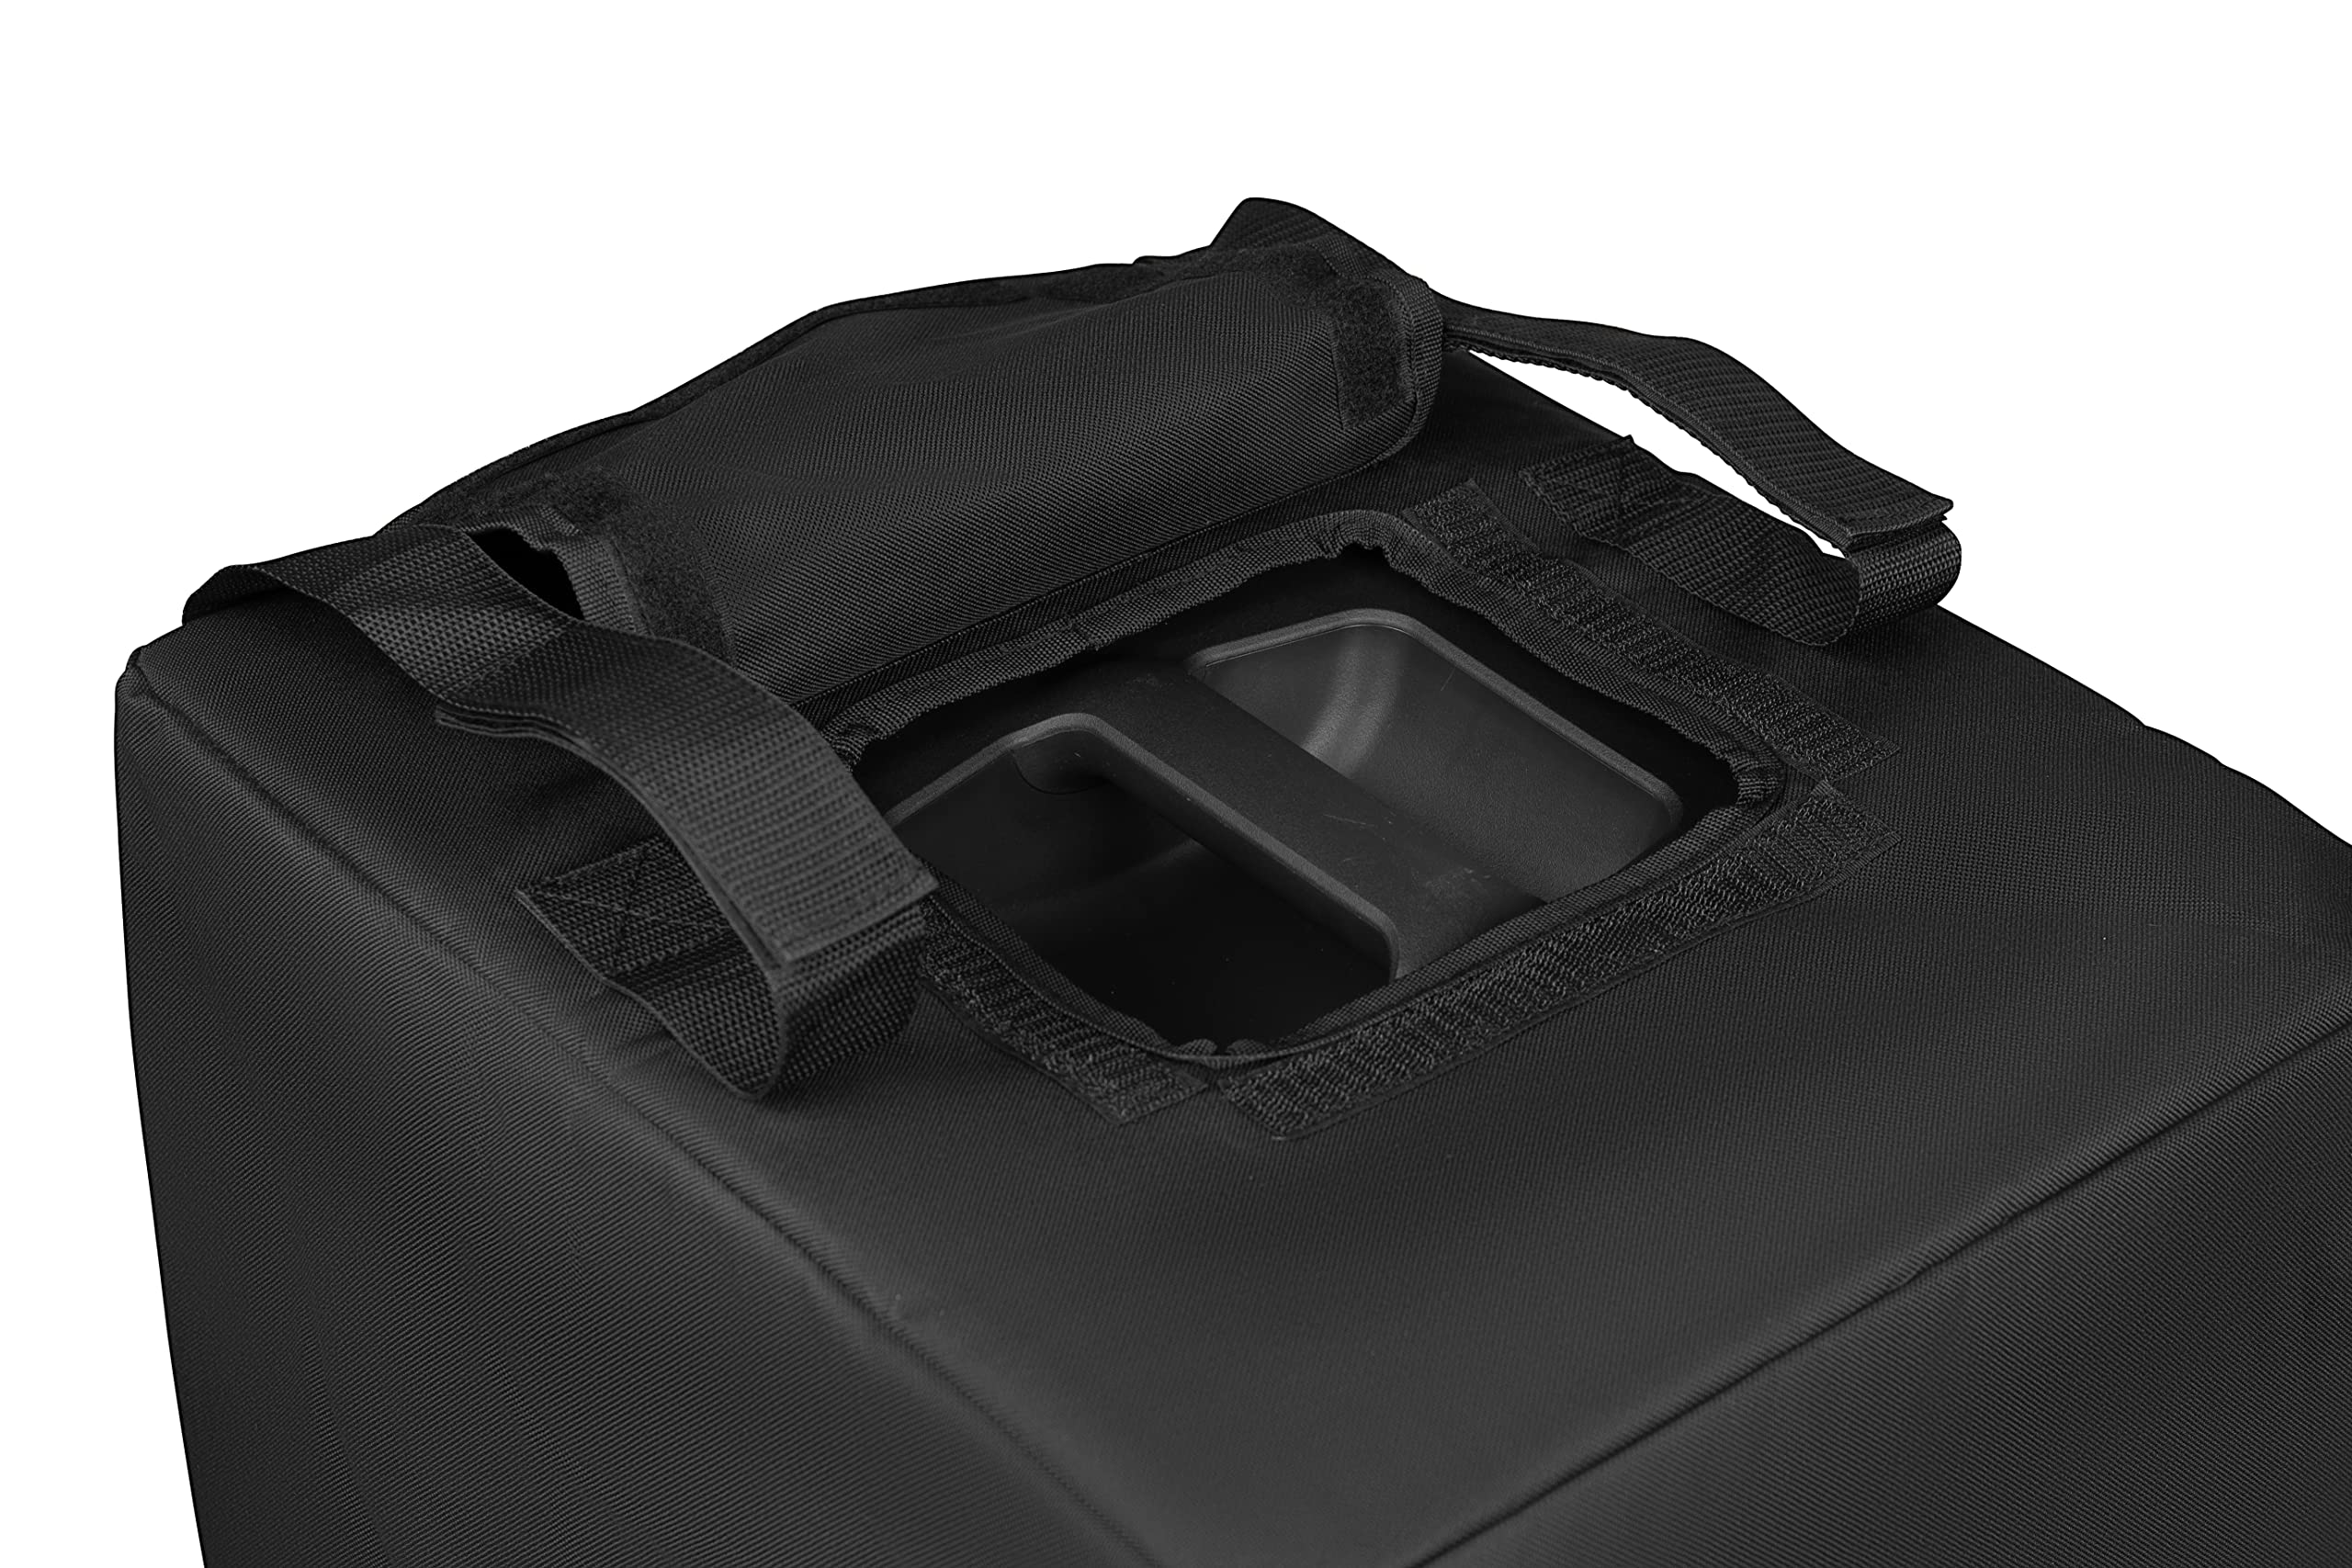 JBL Bags Rolling Base Speaker Transporter for JBL PRX ONE PA System (PRXONE-TRANSPORTER-NA)